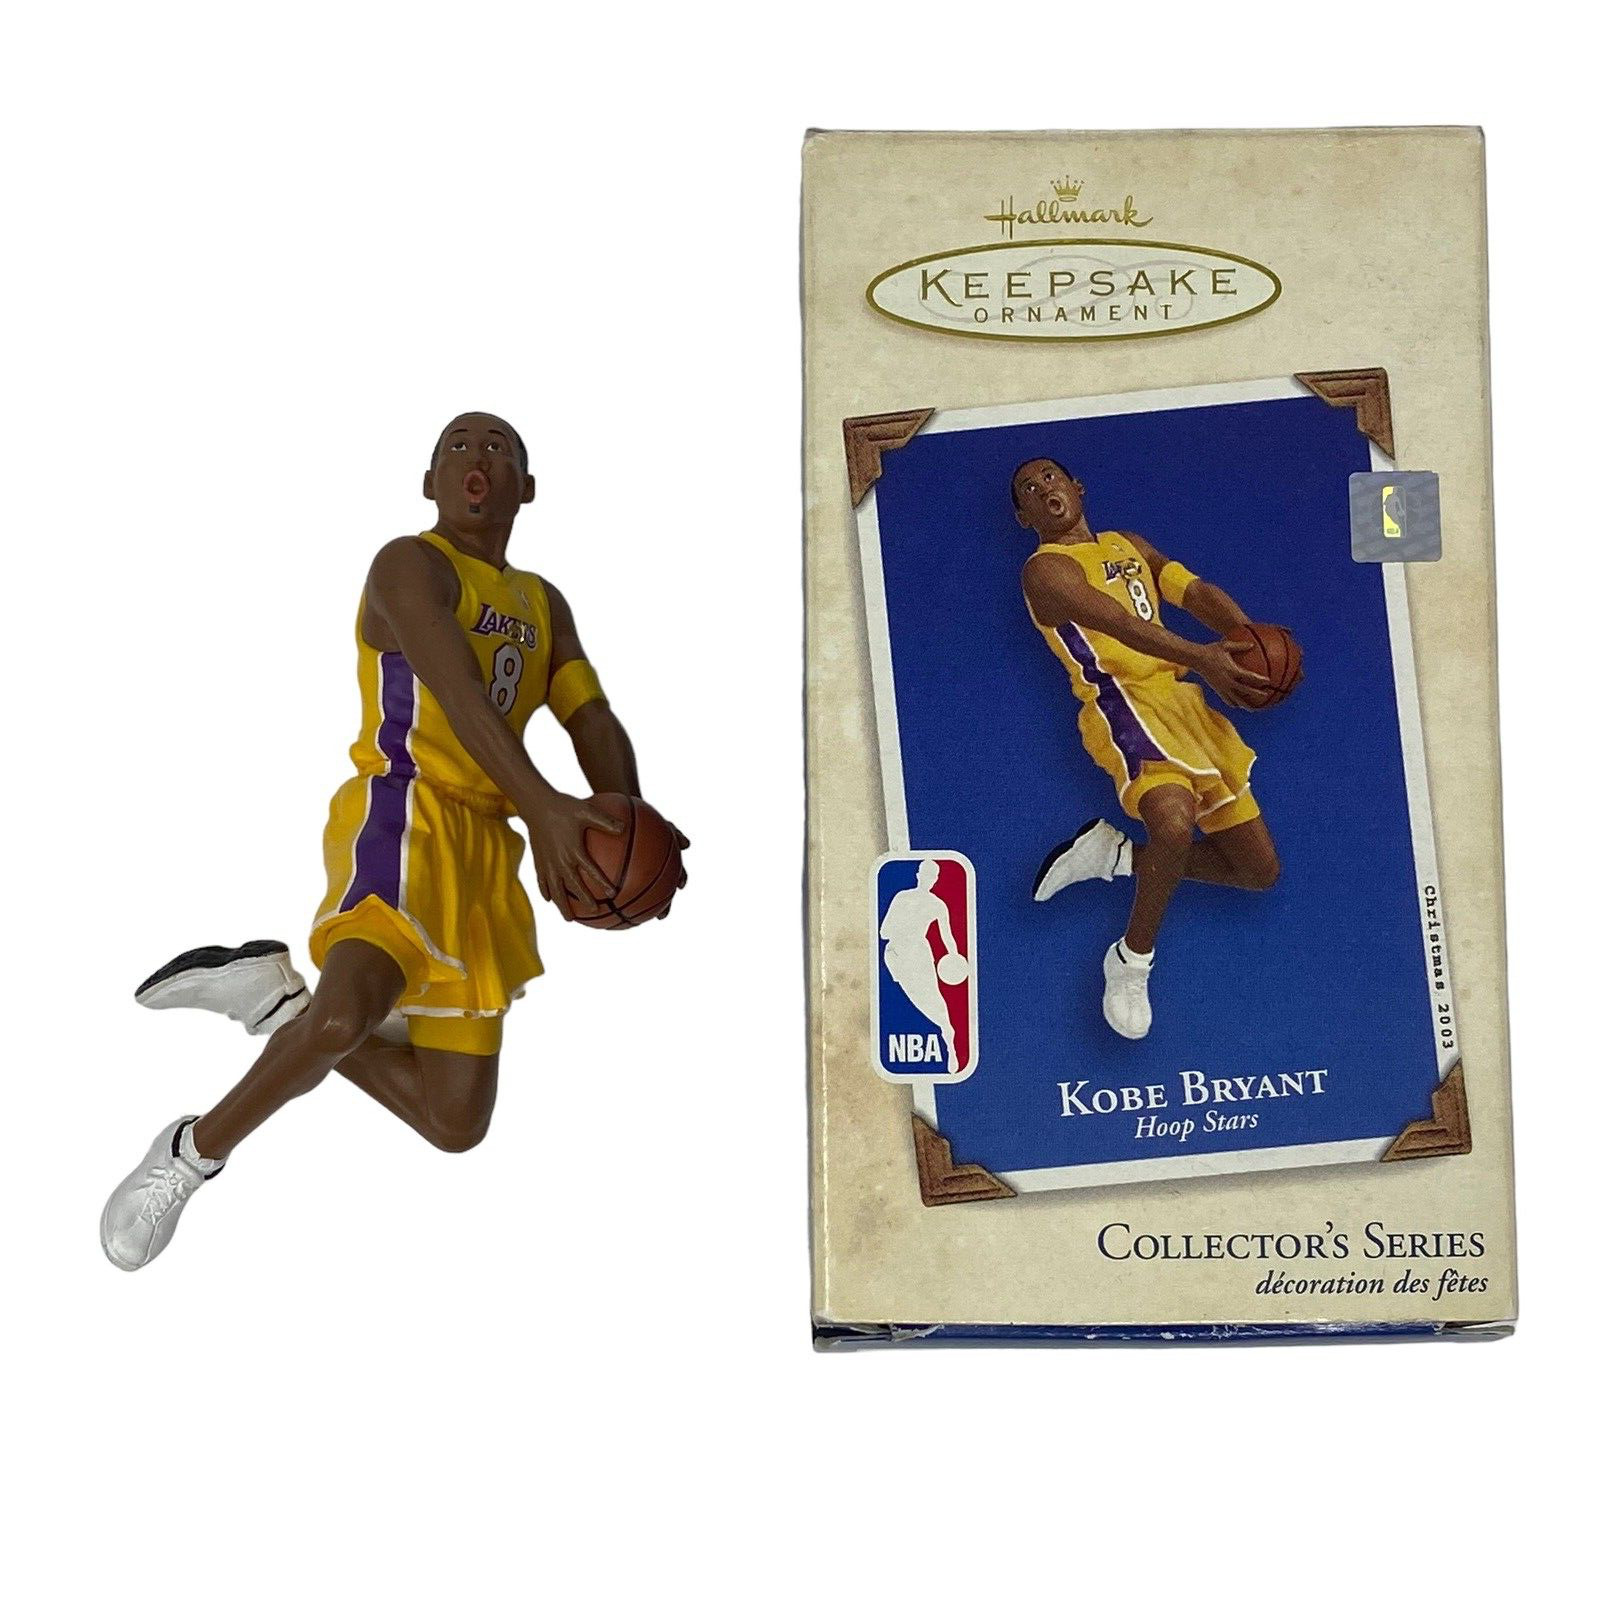 Hallmark Keepsake Ornament Kobe Bryant 2003 Collector Series LA Lakers with box